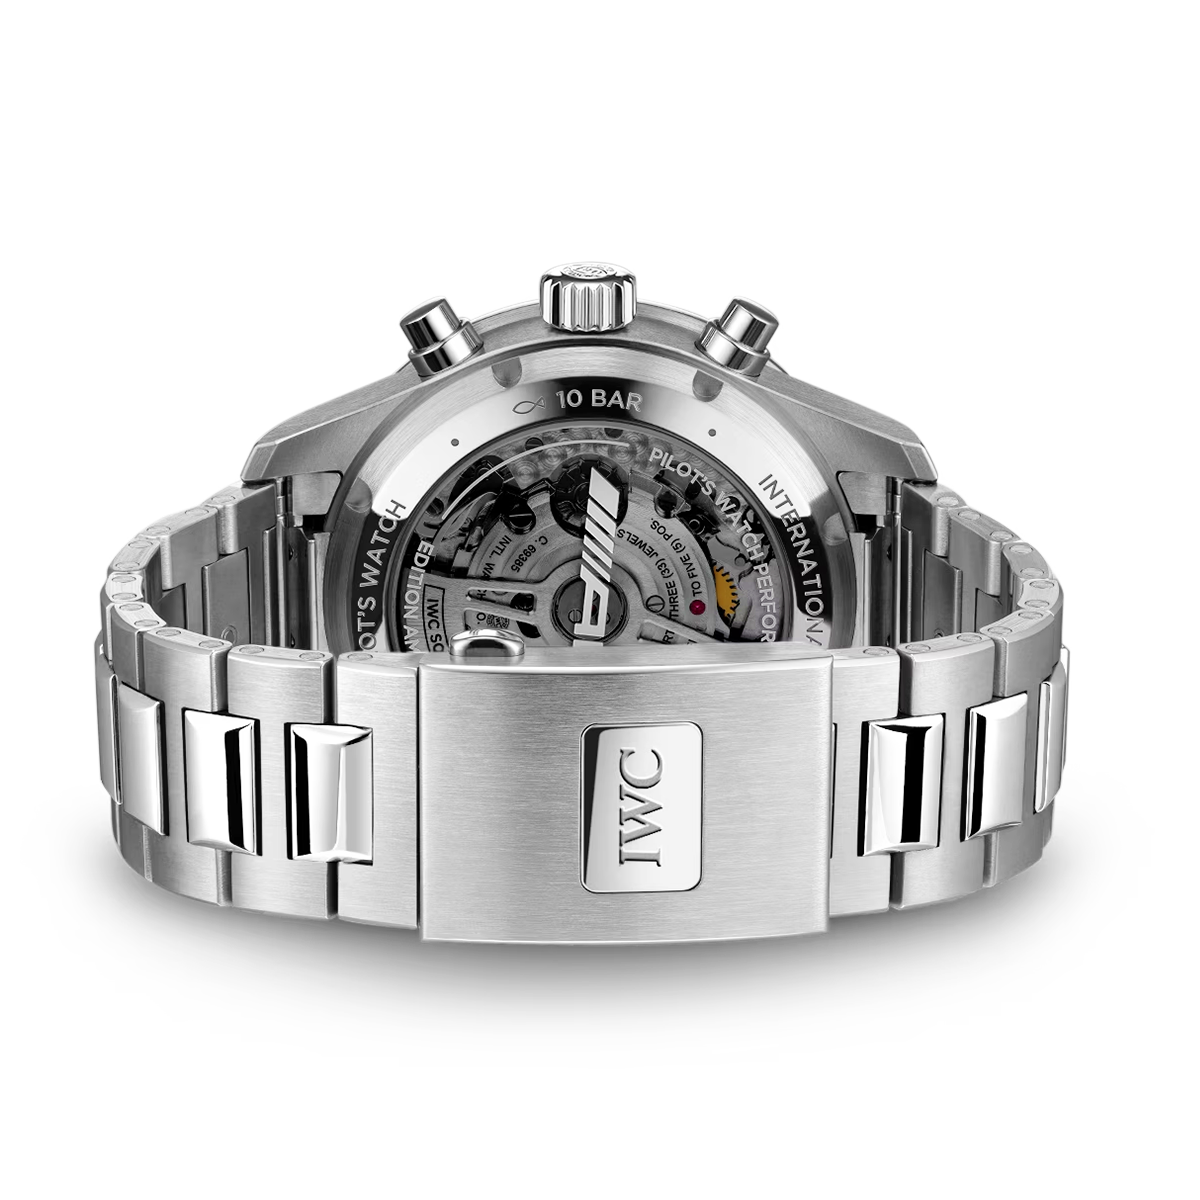 Pilot's 41mm Black Dial AMG Performance Chronograph Bracelet Watch